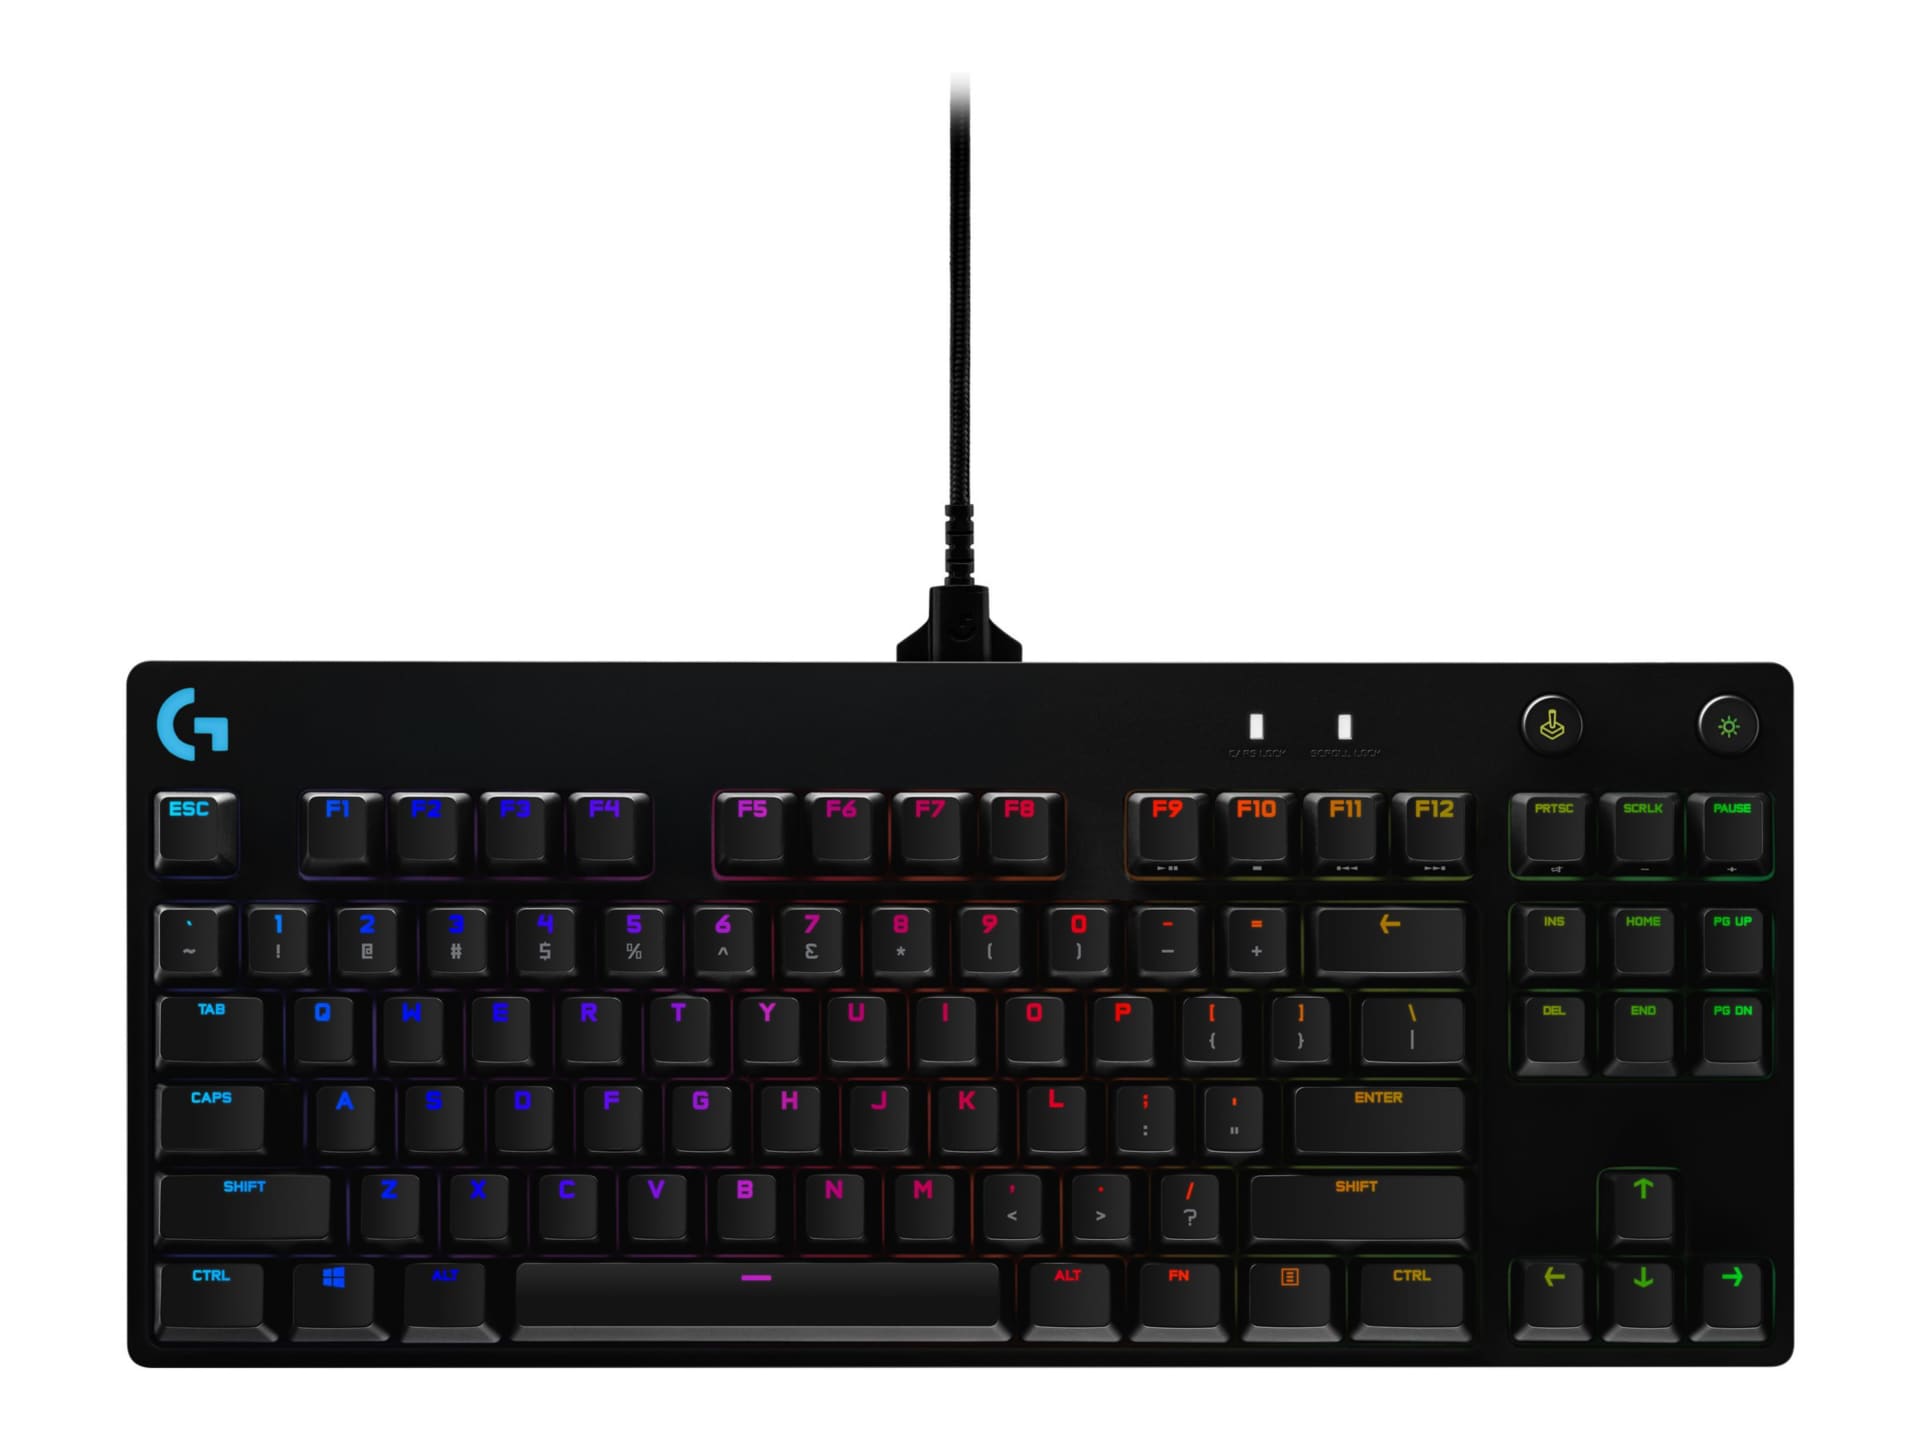 Logitech G Mechanical Gaming Keyboard - keyboard - black - 920-009388 - Keyboards - CDW.com